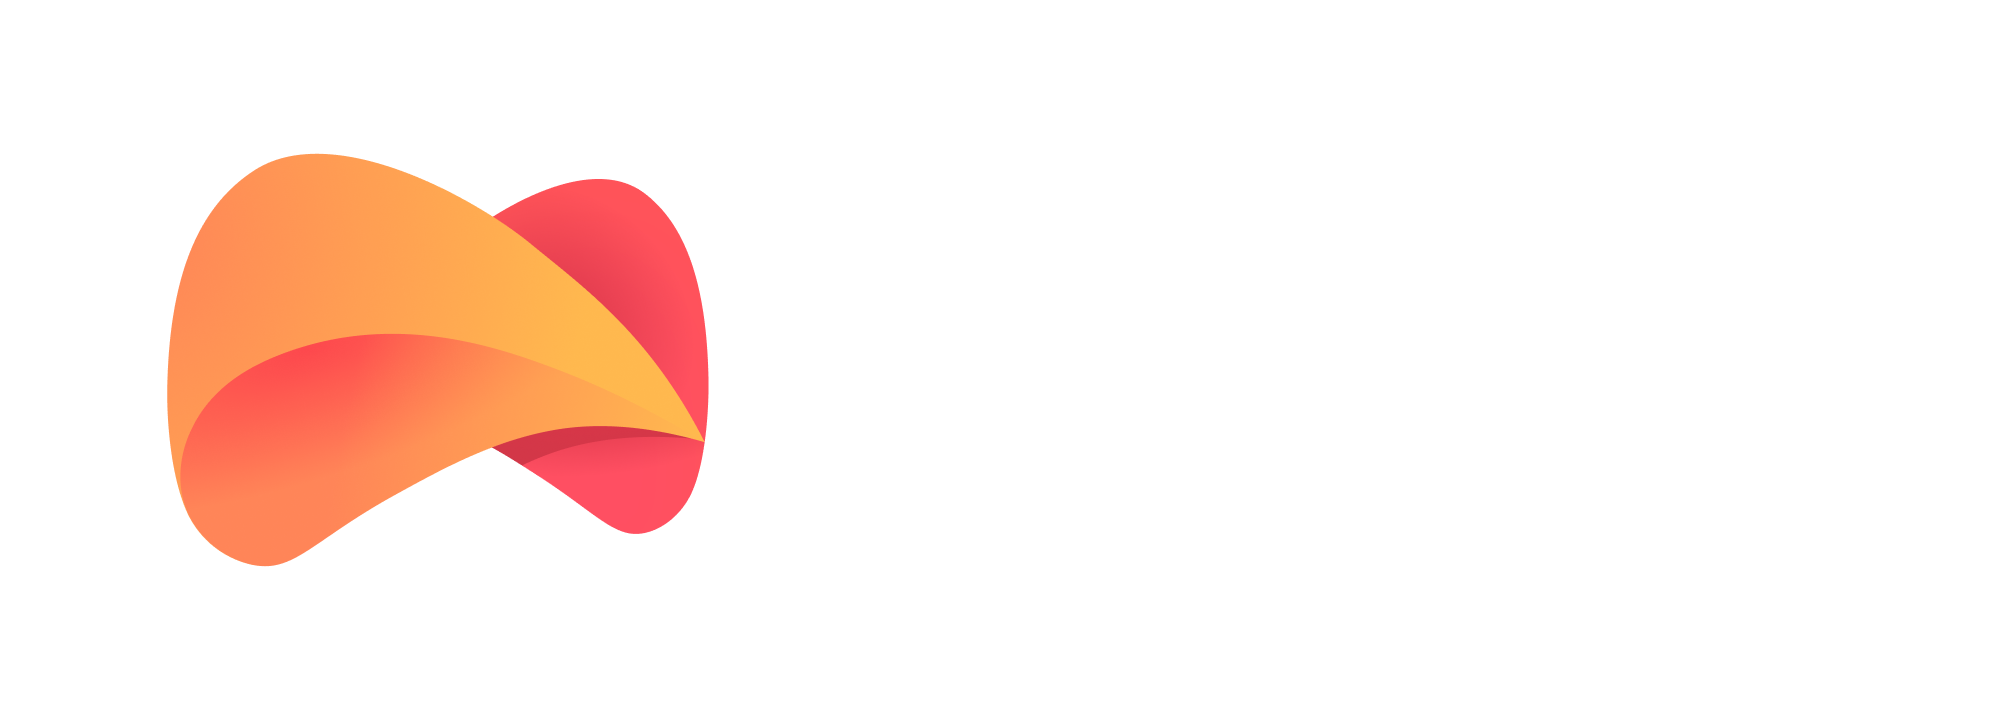 Logo_Gamindo_Horizontal_White